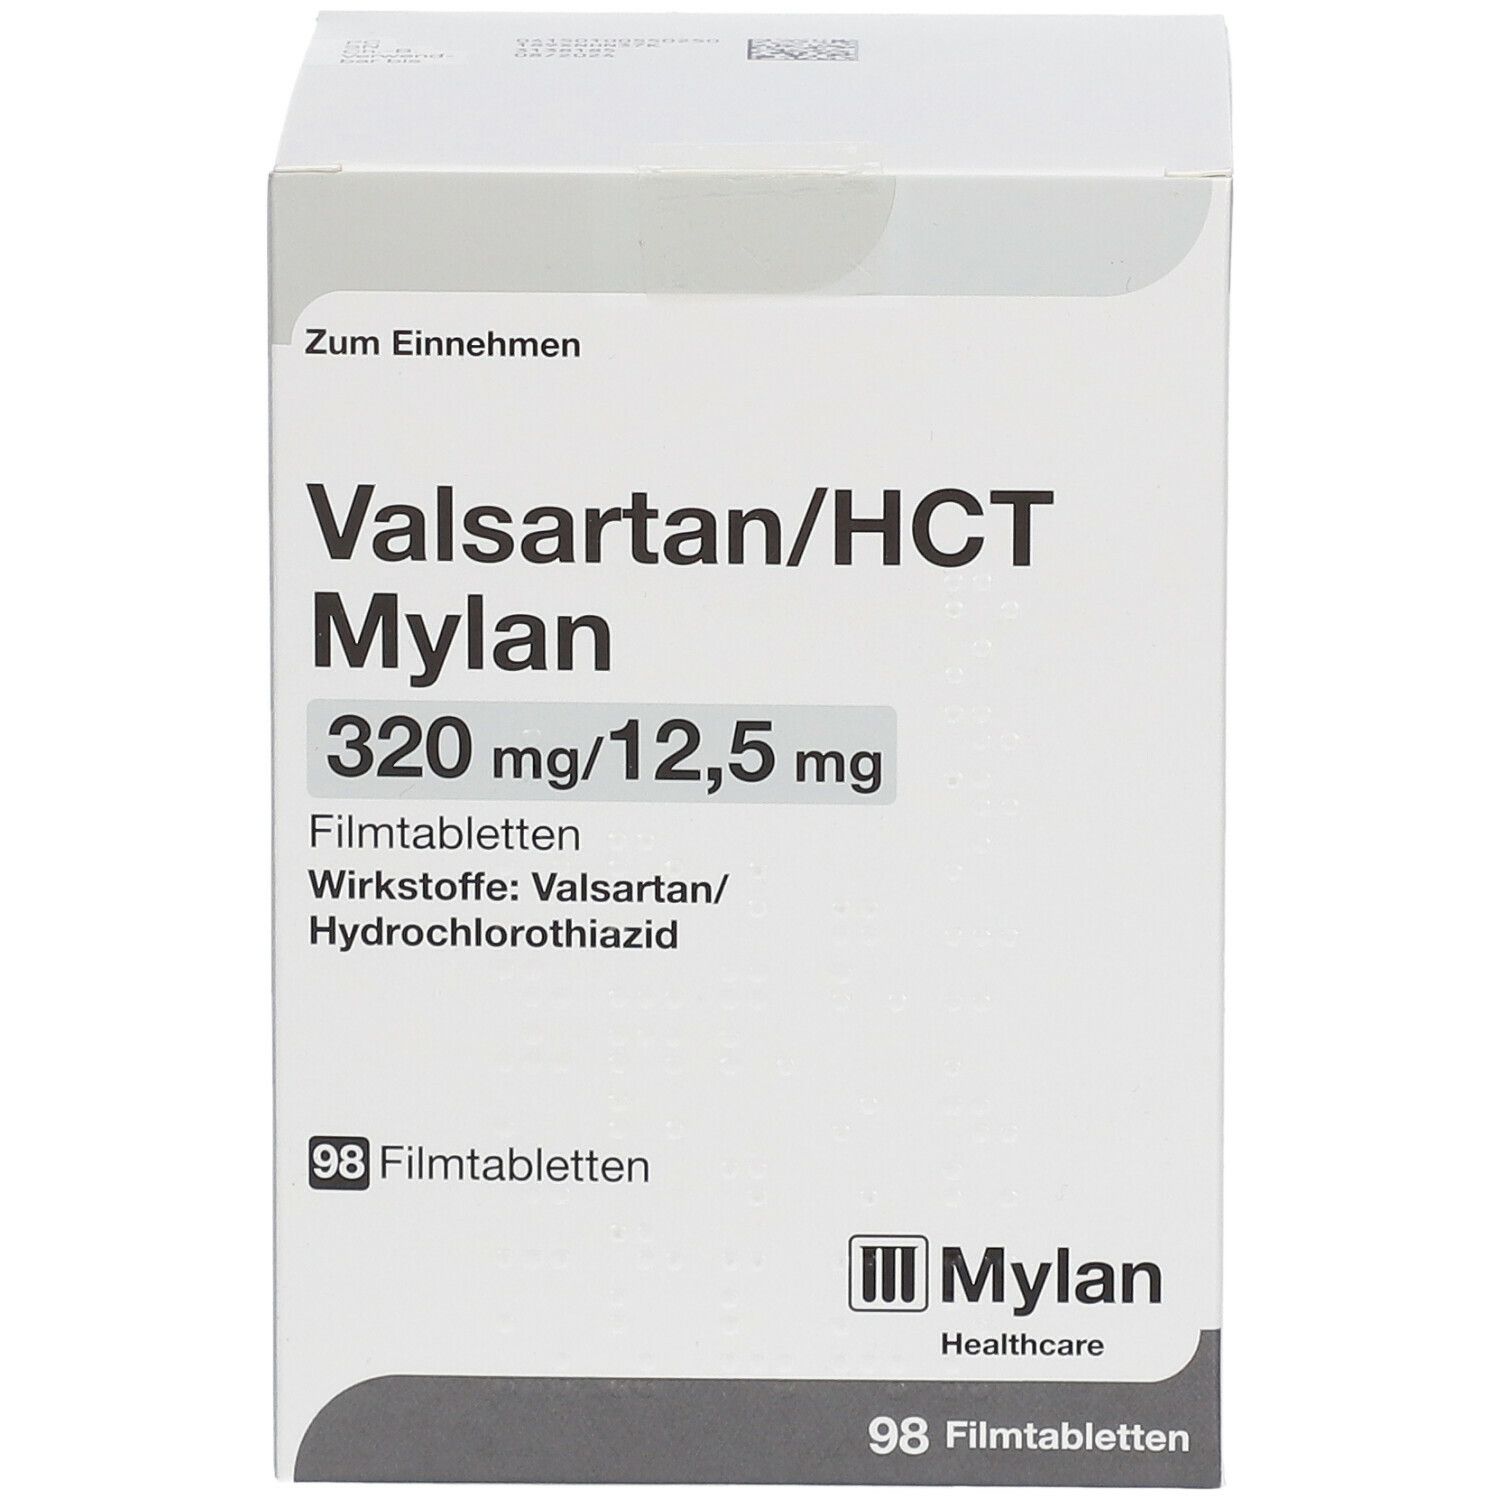 VALSARTAN/HCT MY320/12.5 mg